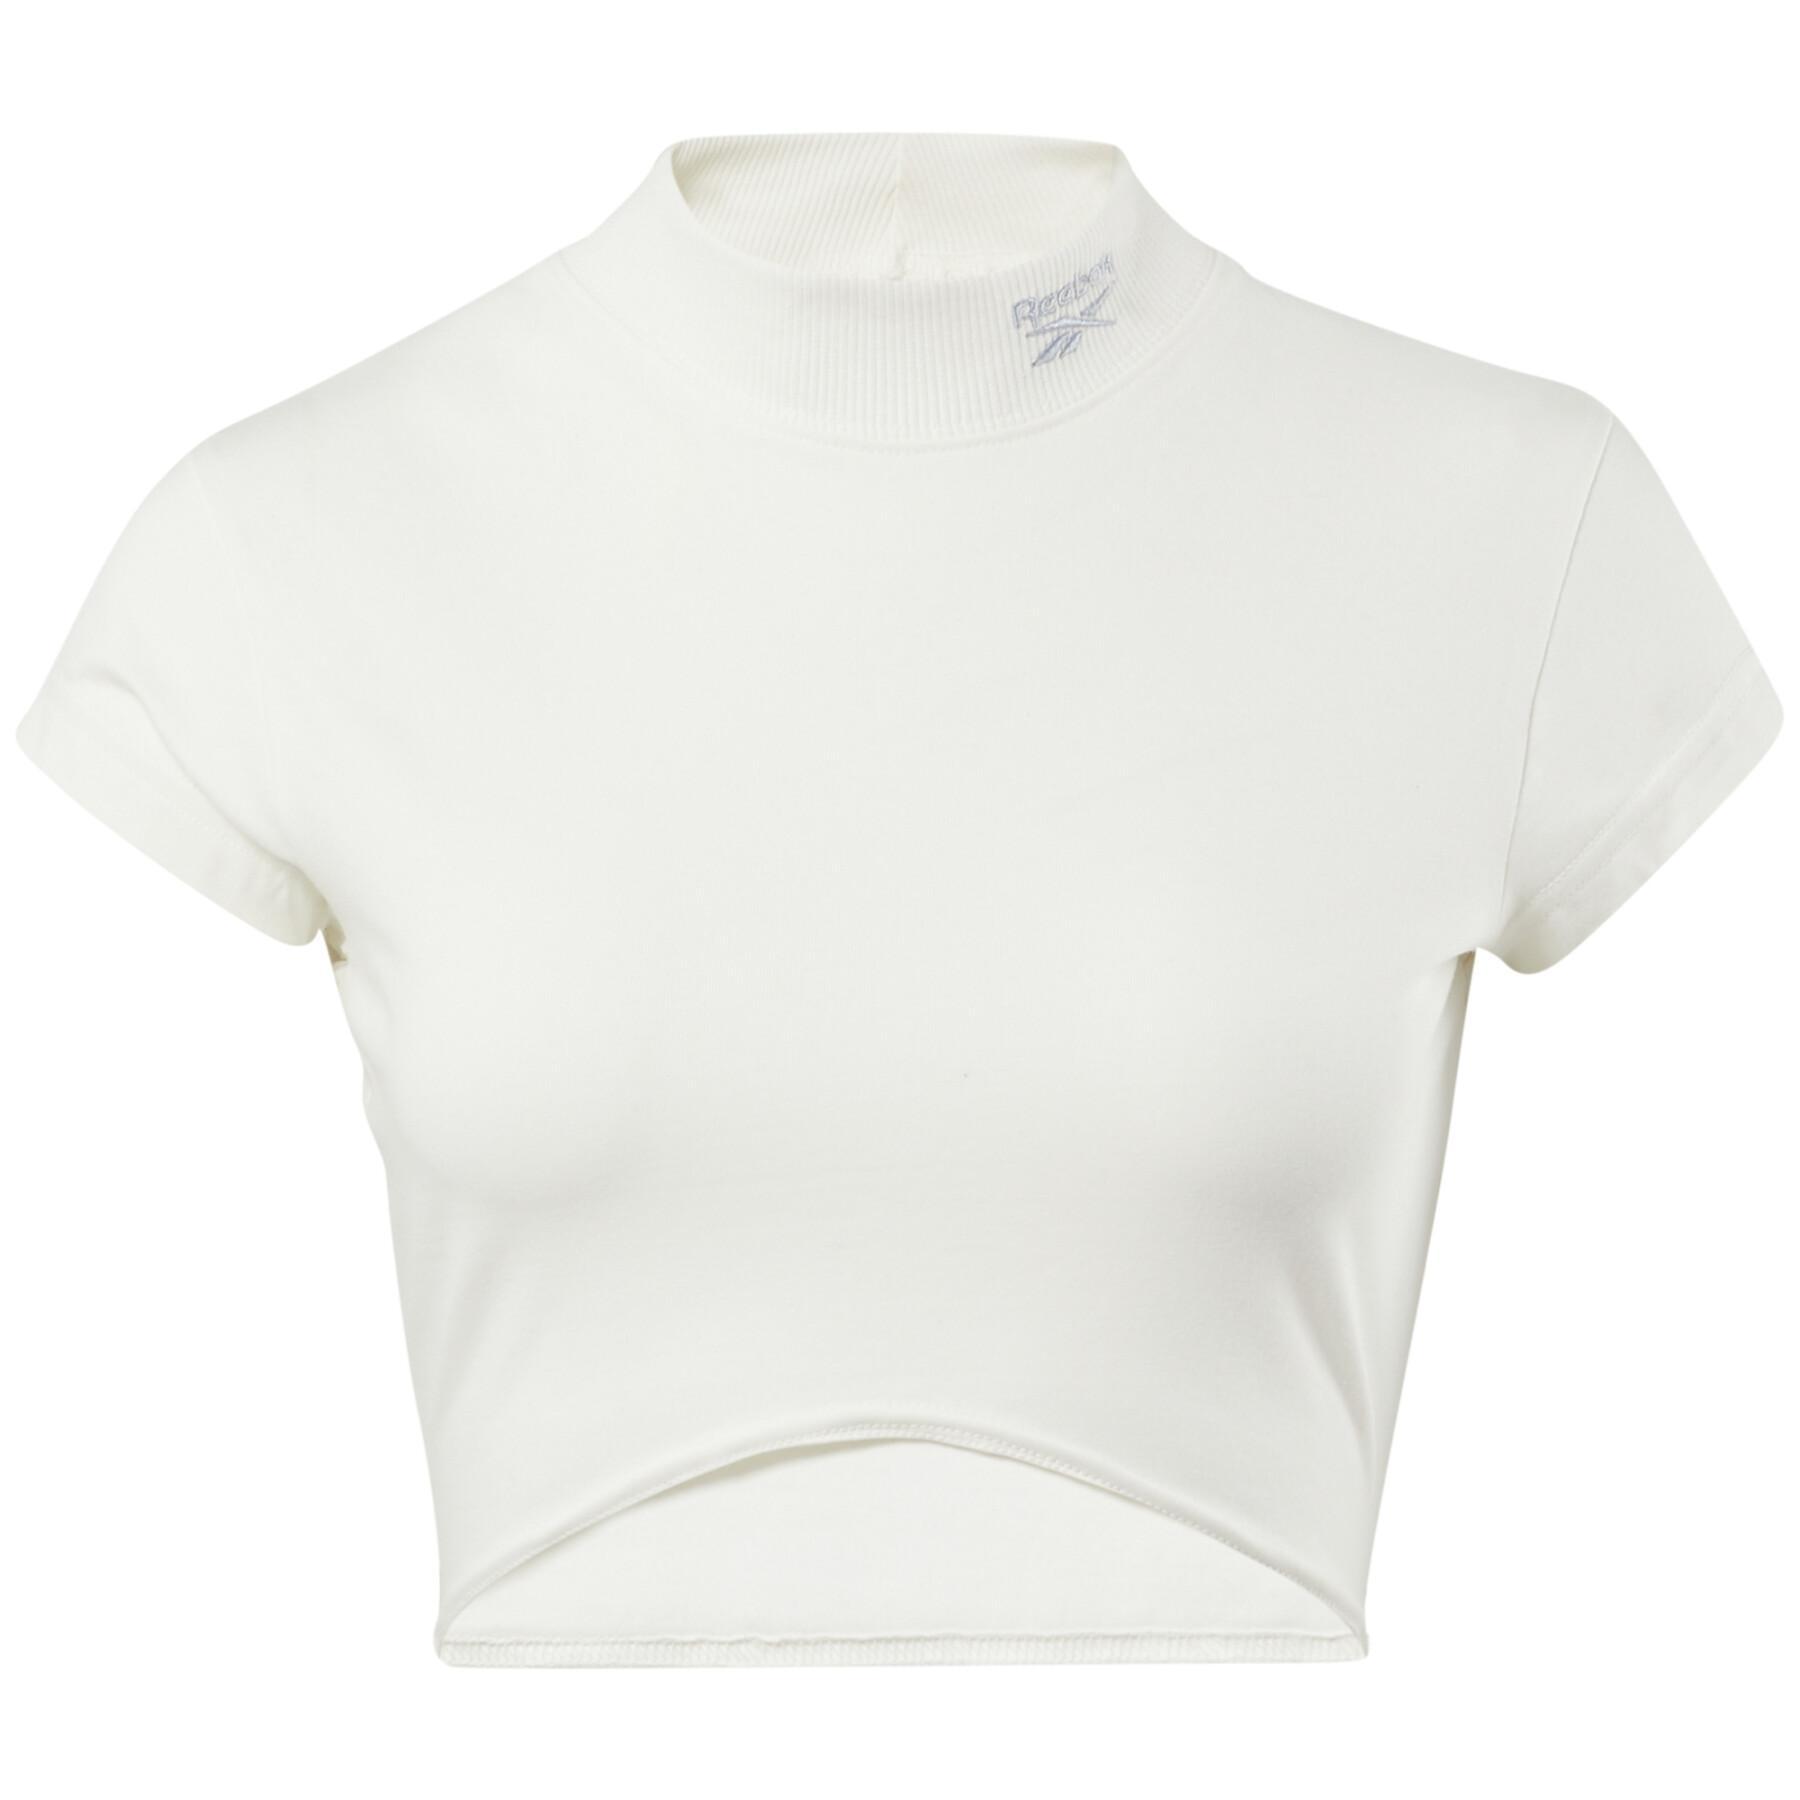 Women's T-shirt Reebok Classics Sleeve Fitted Top